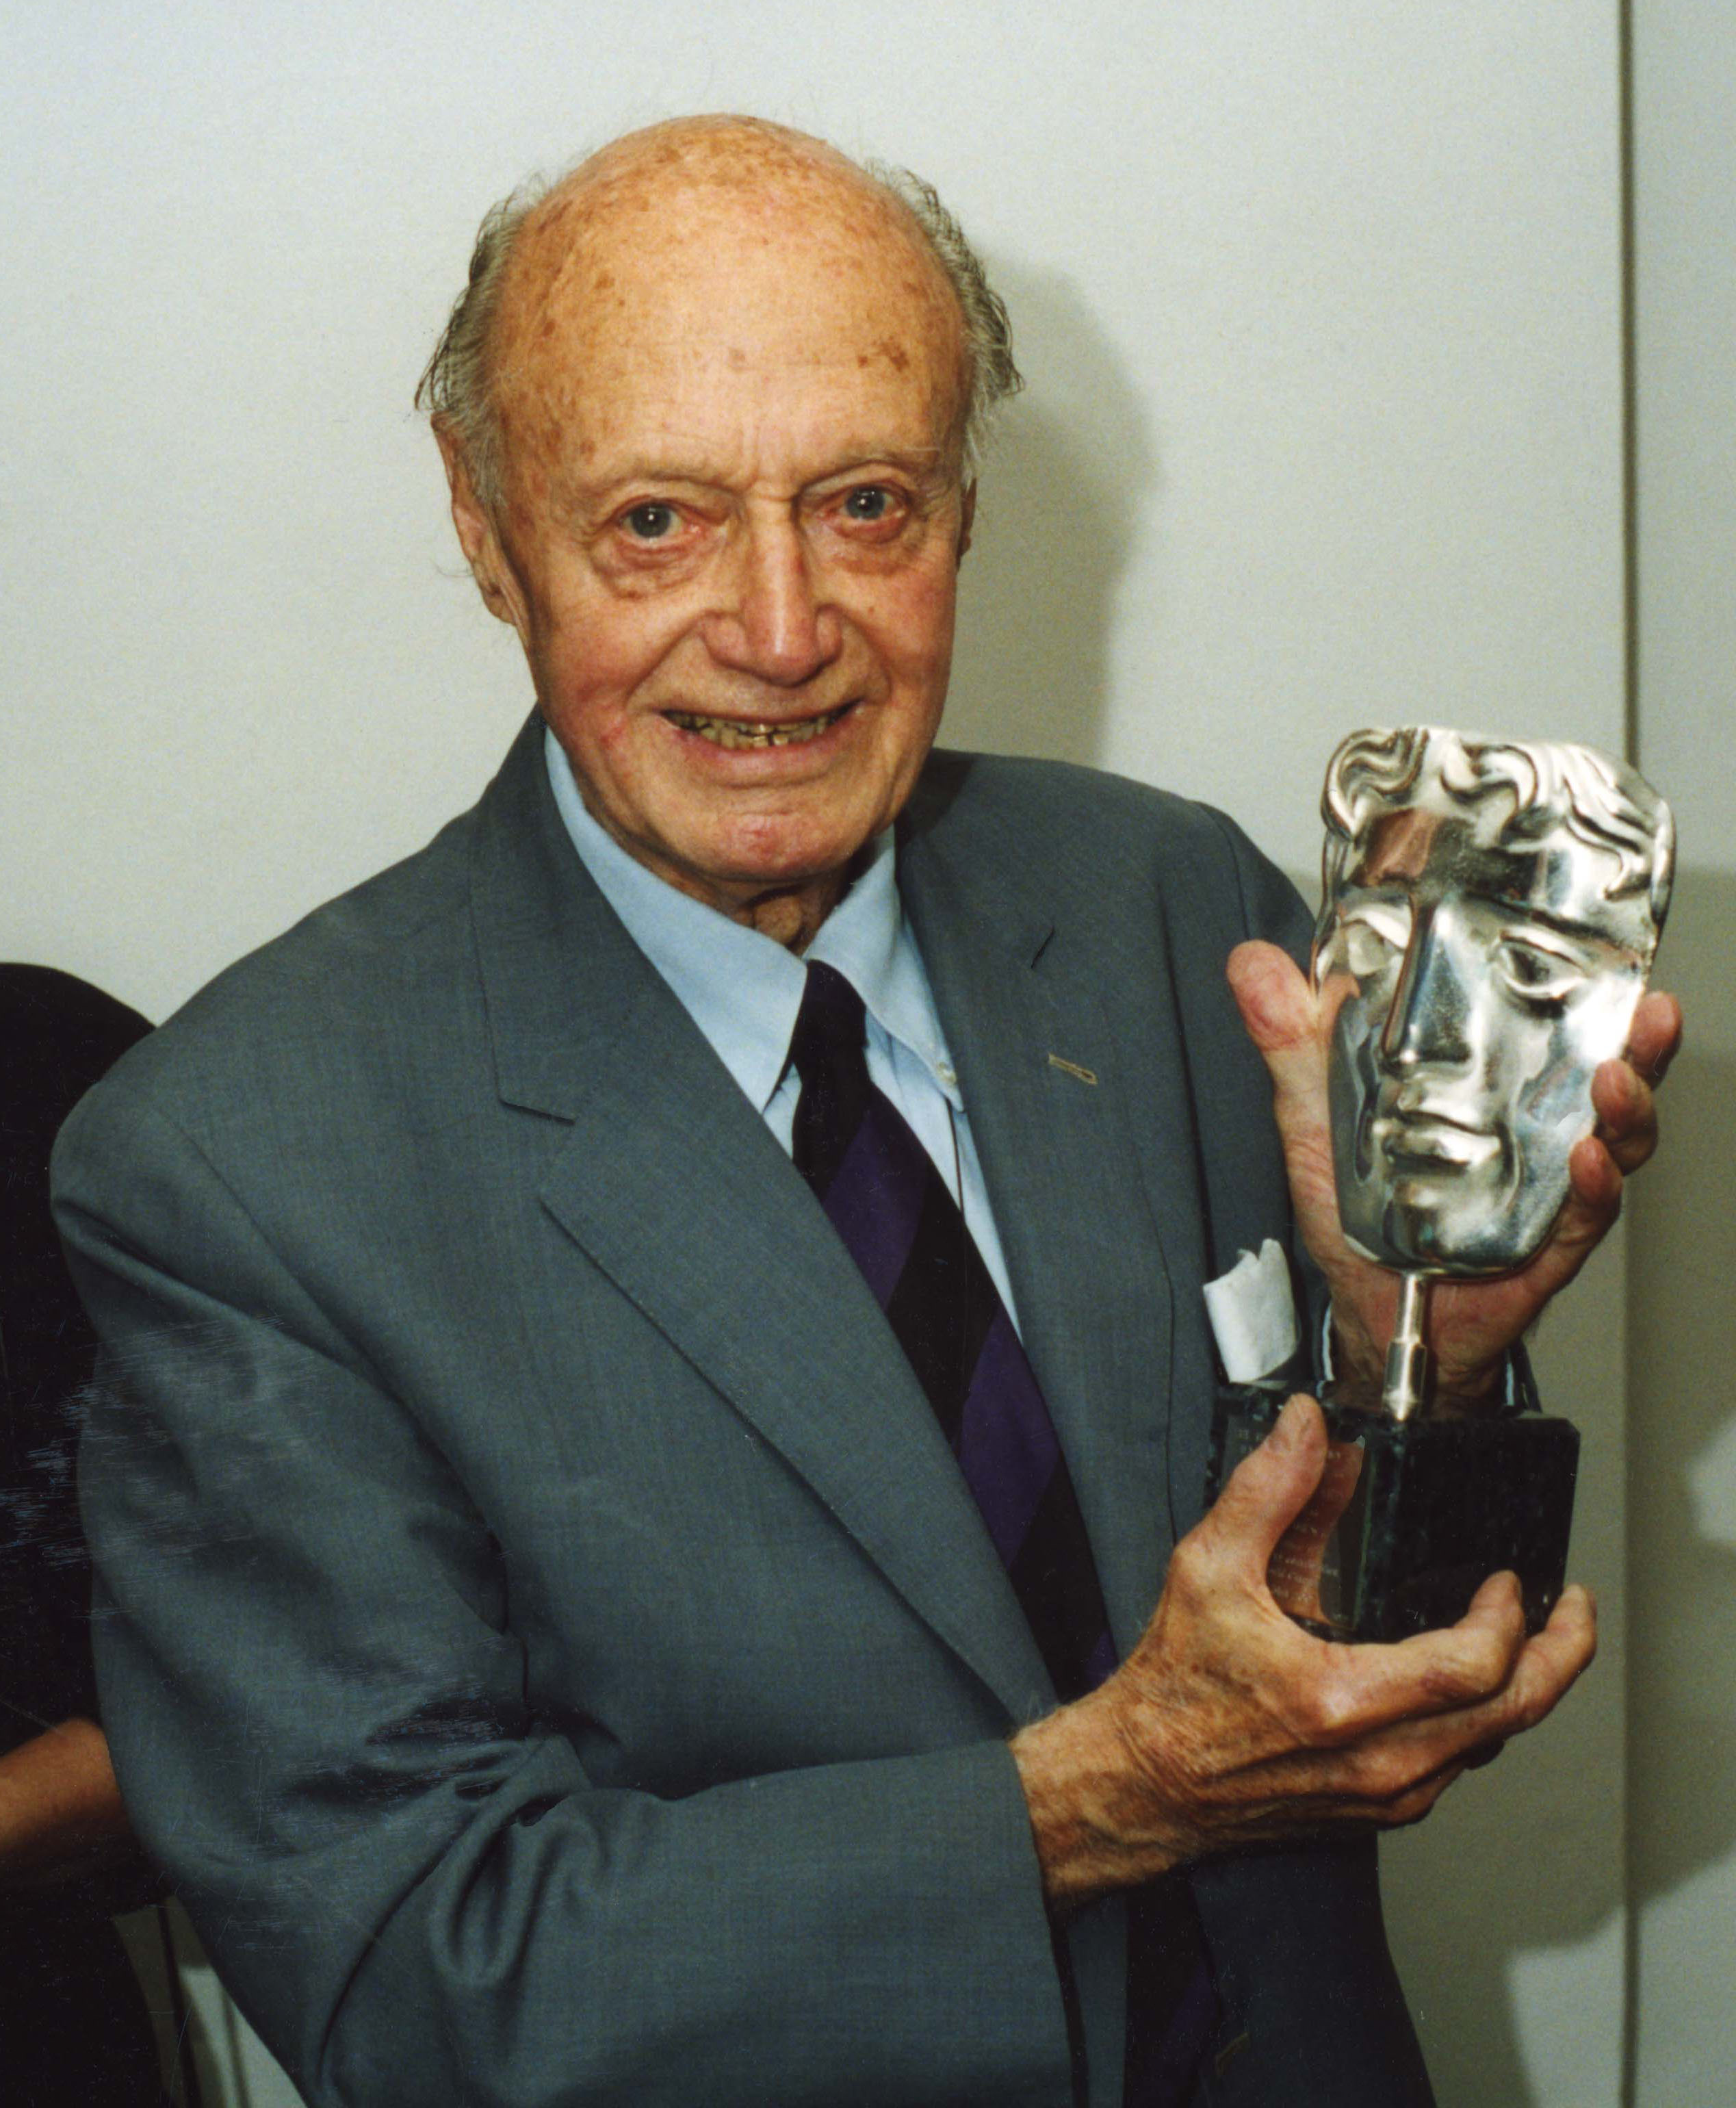 Jack Cardiff Special Award 2001